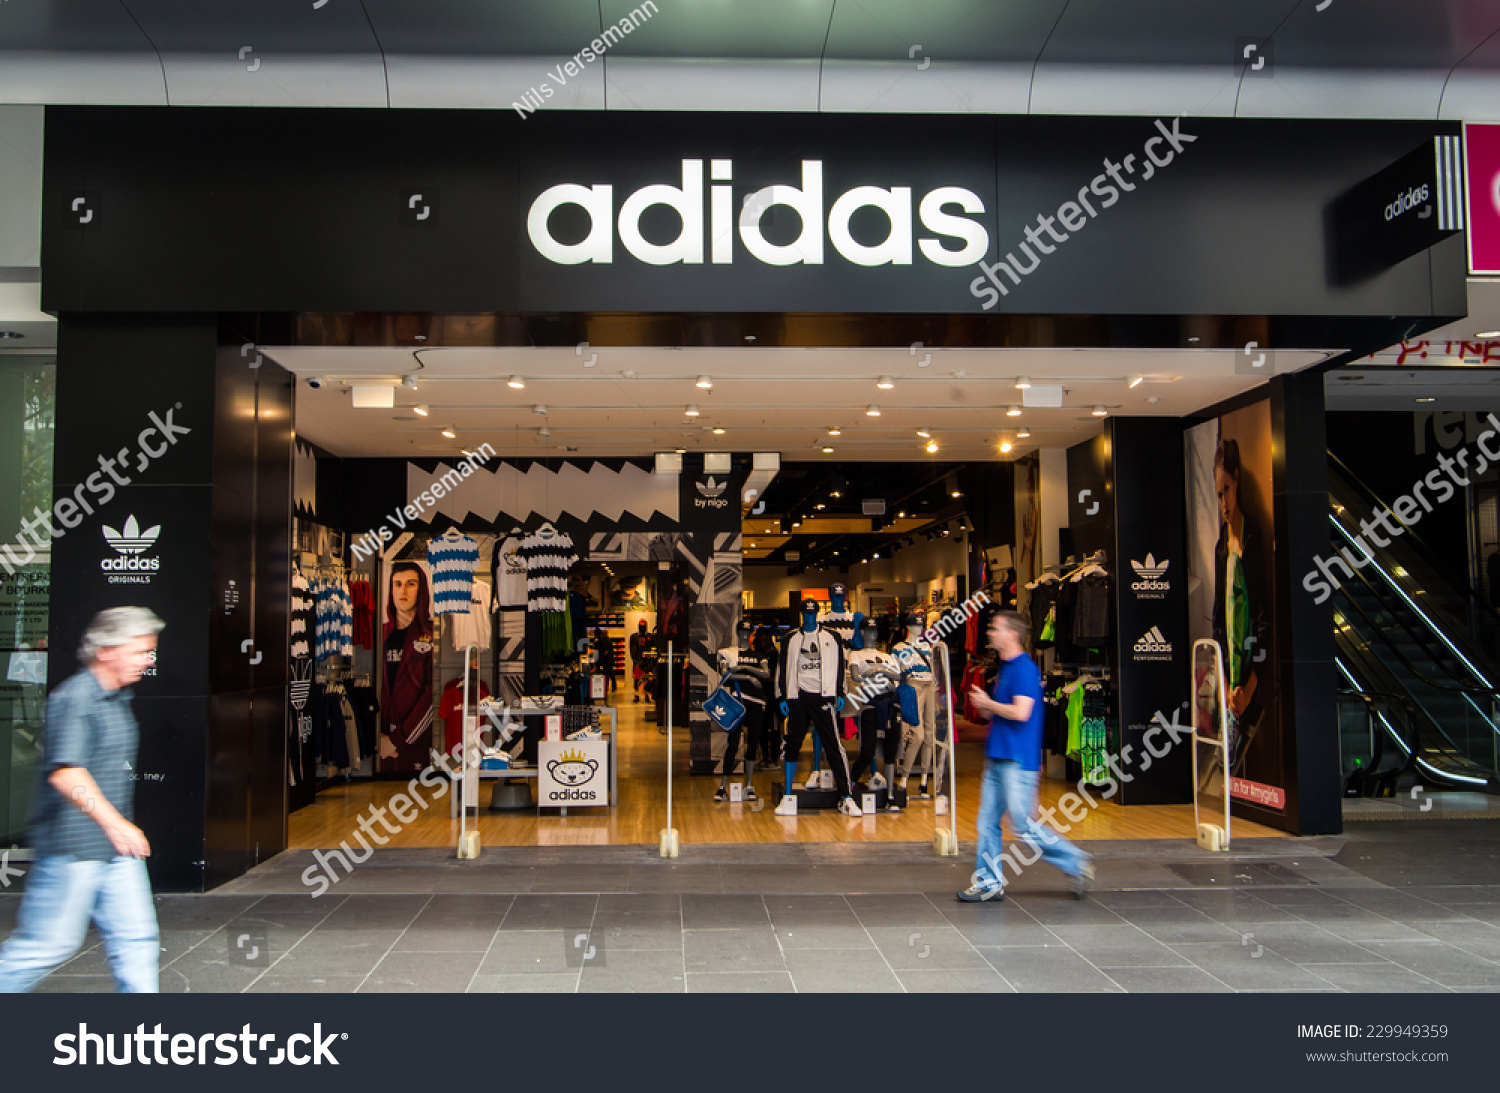 adidas bourke street mall